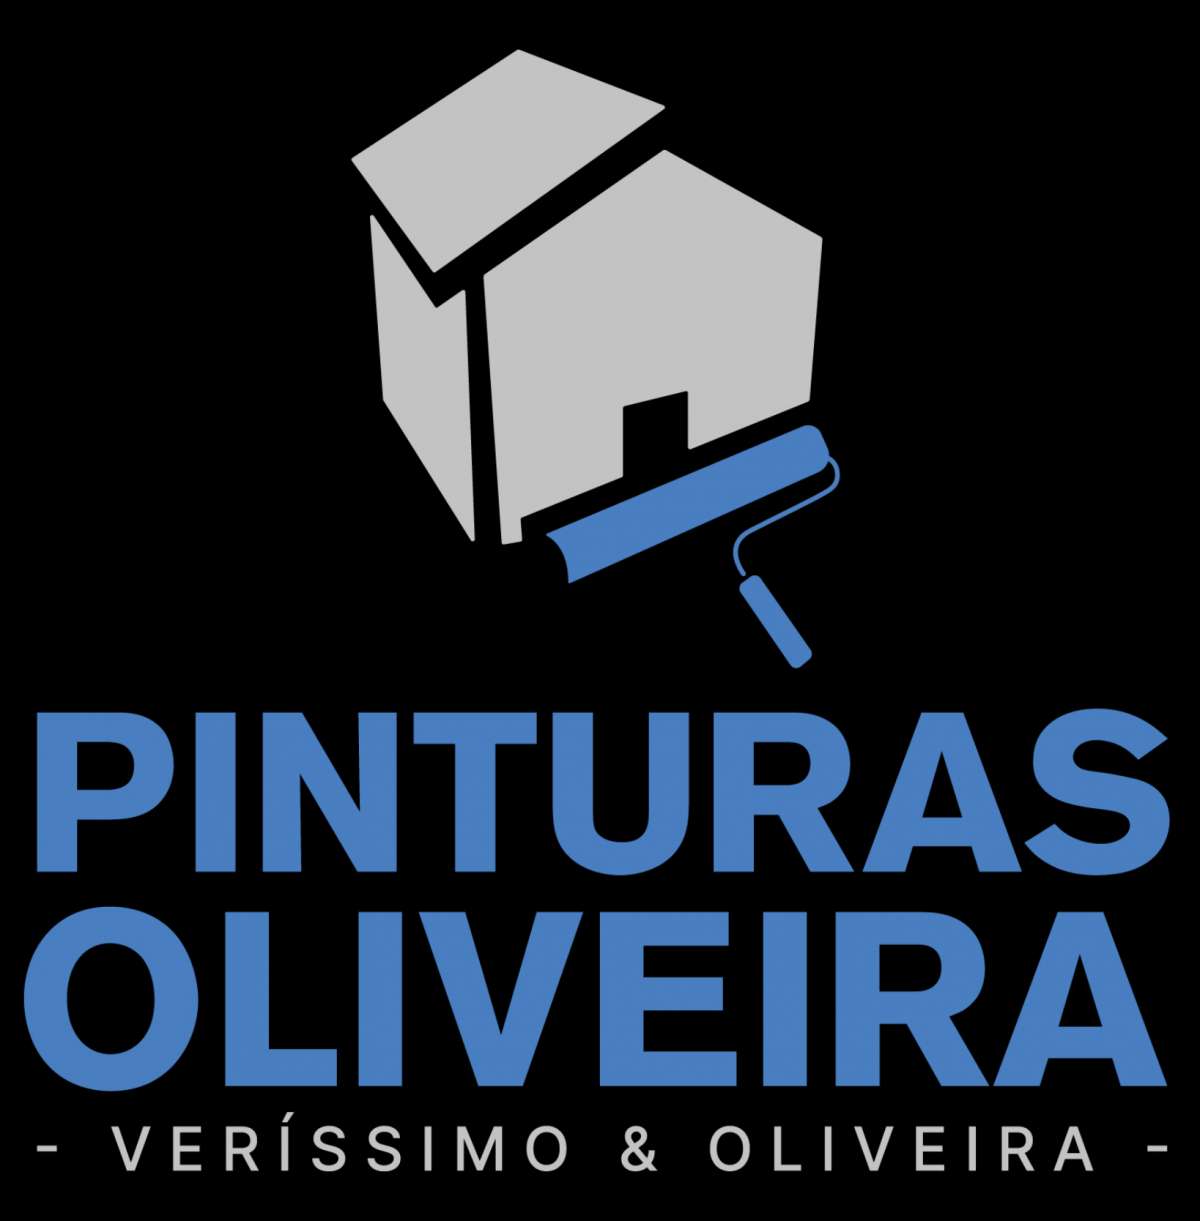 Pinturas Oliveira - Vila Nova de Famalicão - Pintura de Prédios